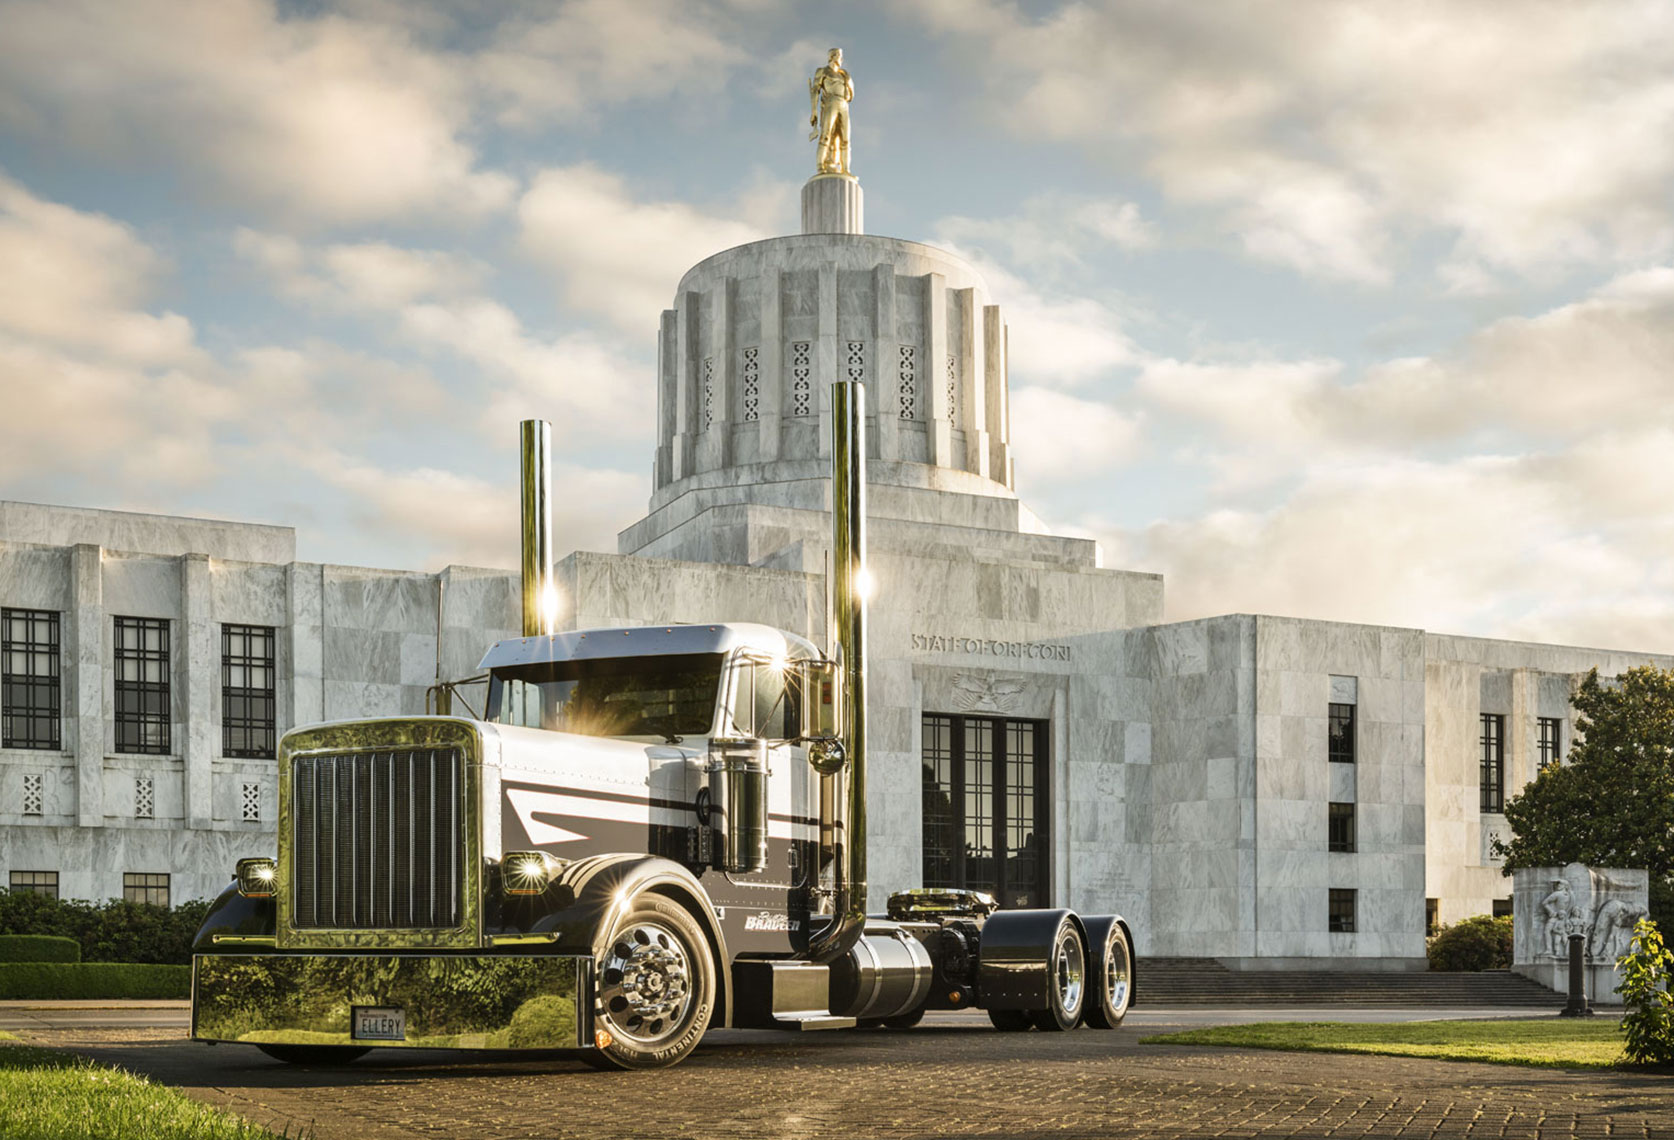 2003 Peterbilt 379 daycab belonging to Rusty Bradeen Trucking of Edgewood, a Oregon State Capitol